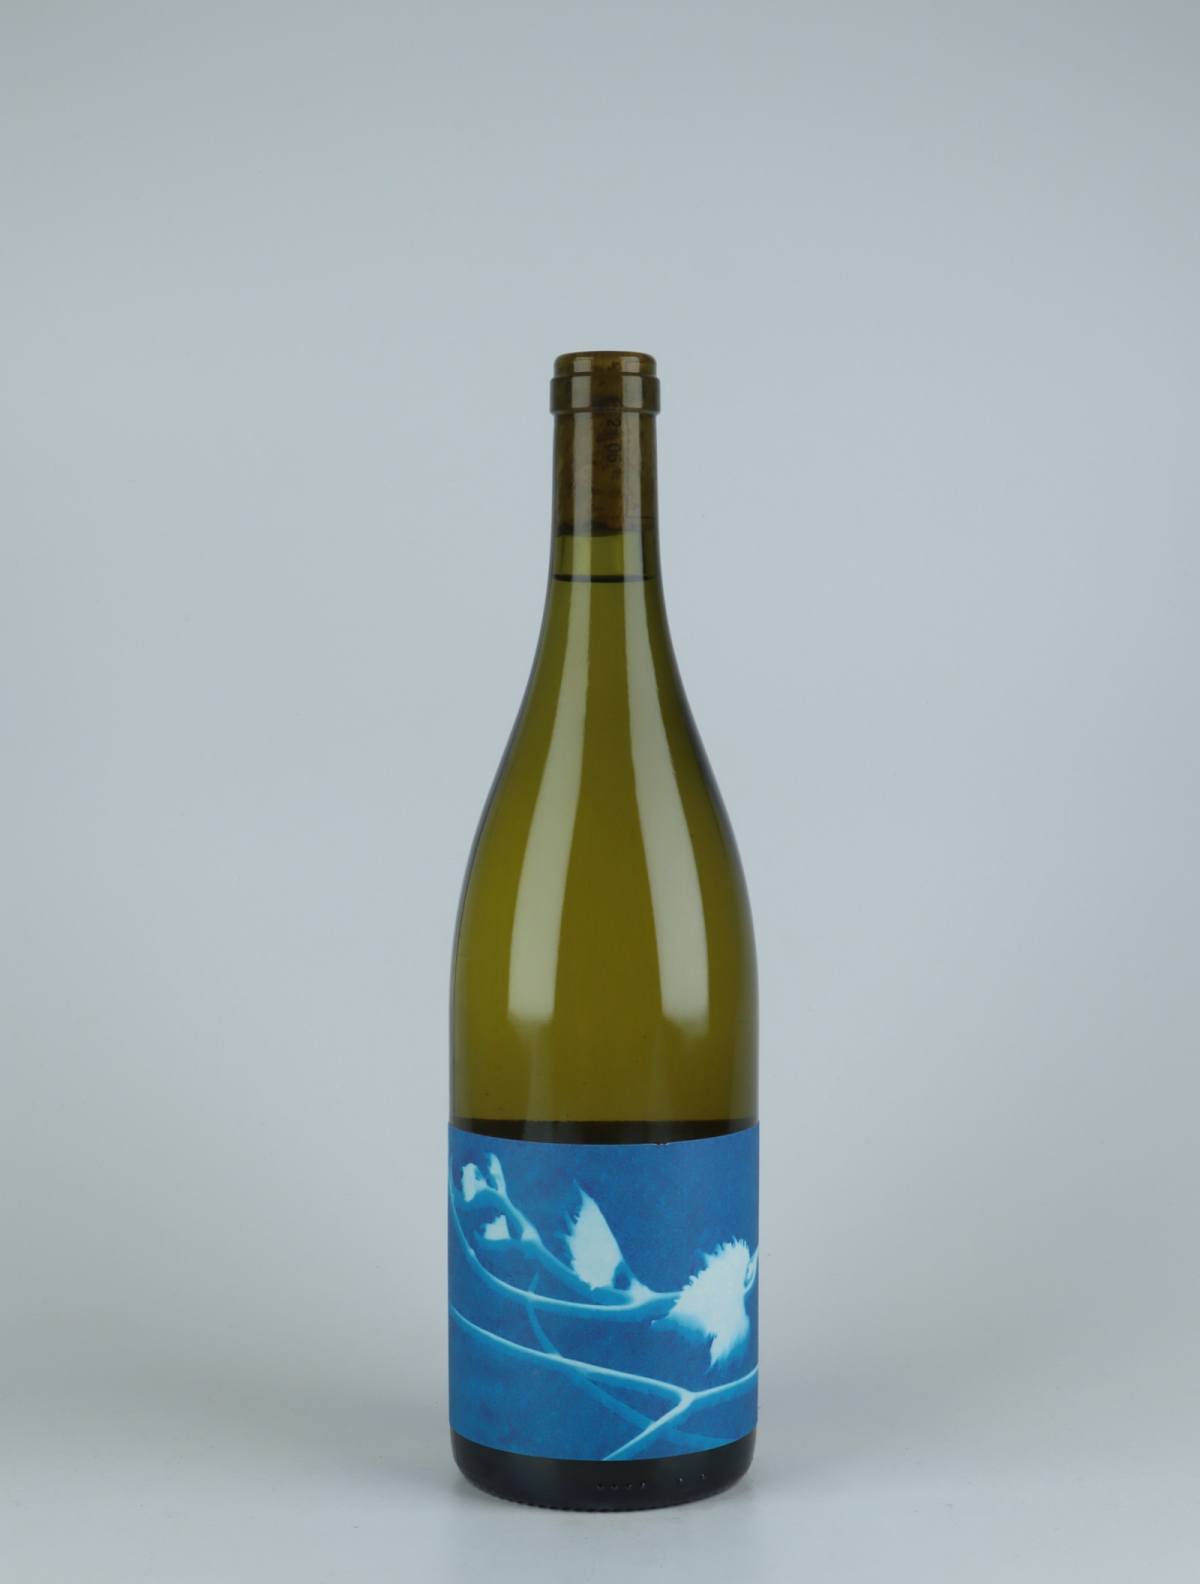 En flaske 2019 Le Rayon Blanc Hvidvin fra Thomas Puéchavy, Loire i Frankrig